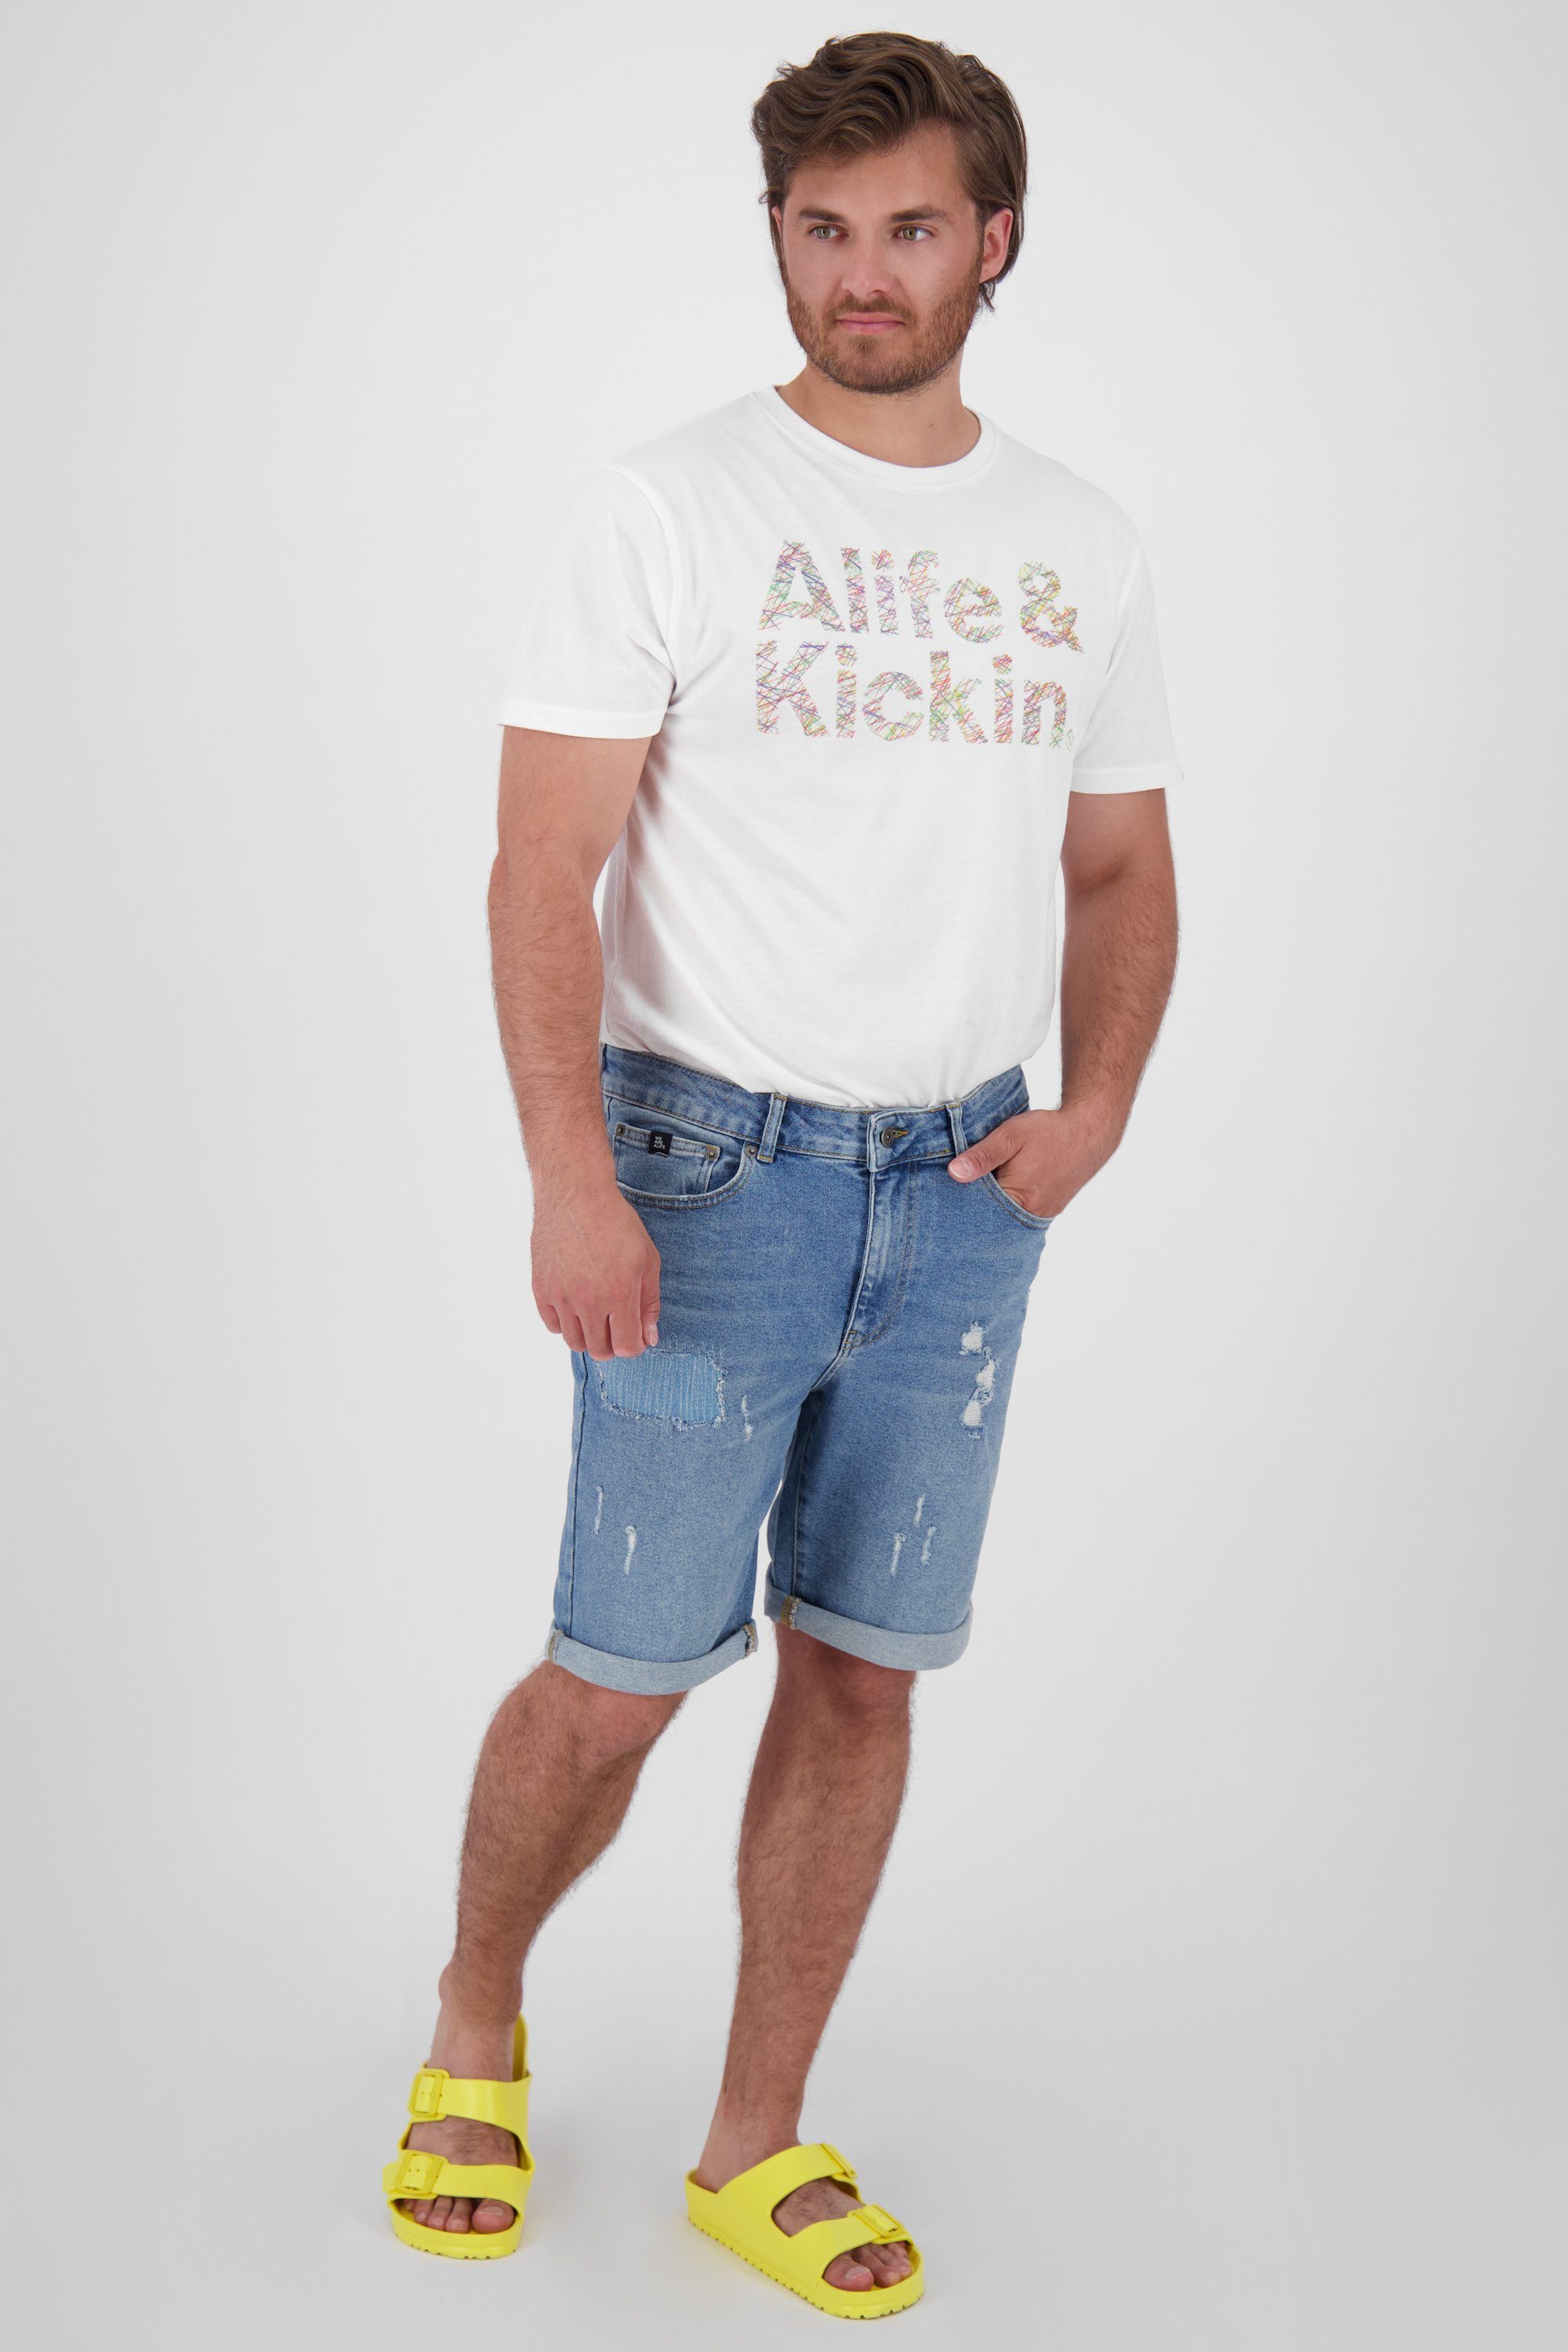 Alife & Kickin Shorts Jeansshorts, MorganAK Herren Shorts light DNM denim Hose washed kurze A